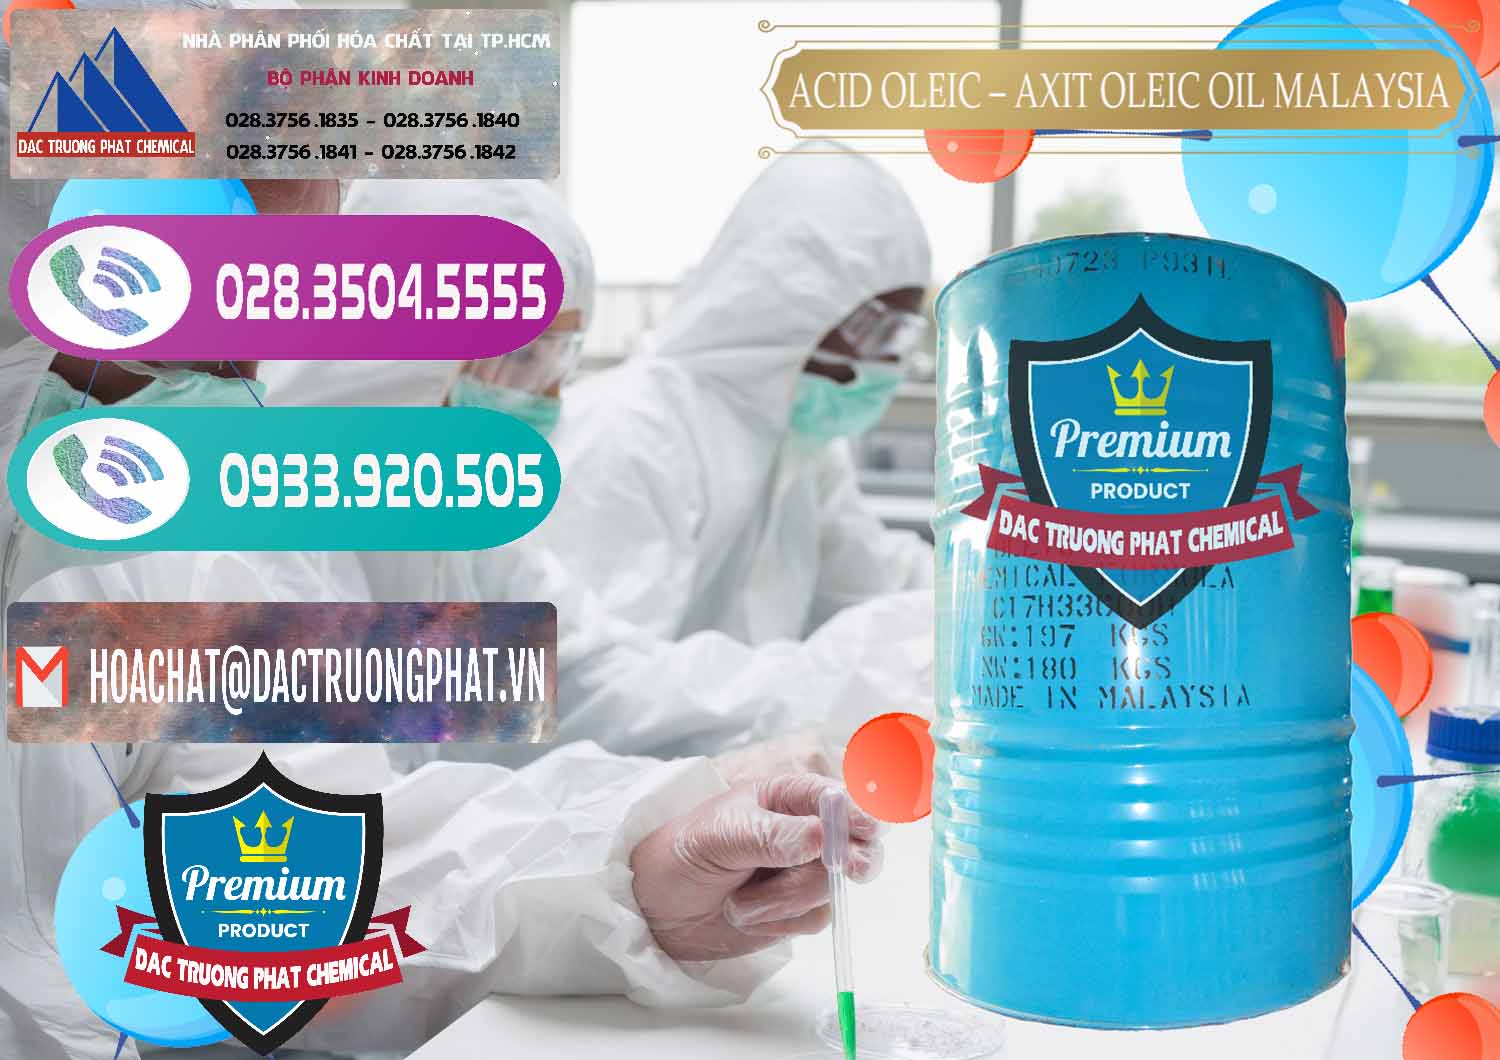 Công ty bán & cung cấp Acid Oleic – Axit Oleic Oil Malaysia - 0013 - Cty bán _ cung cấp hóa chất tại TP.HCM - hoachatxulynuoc.com